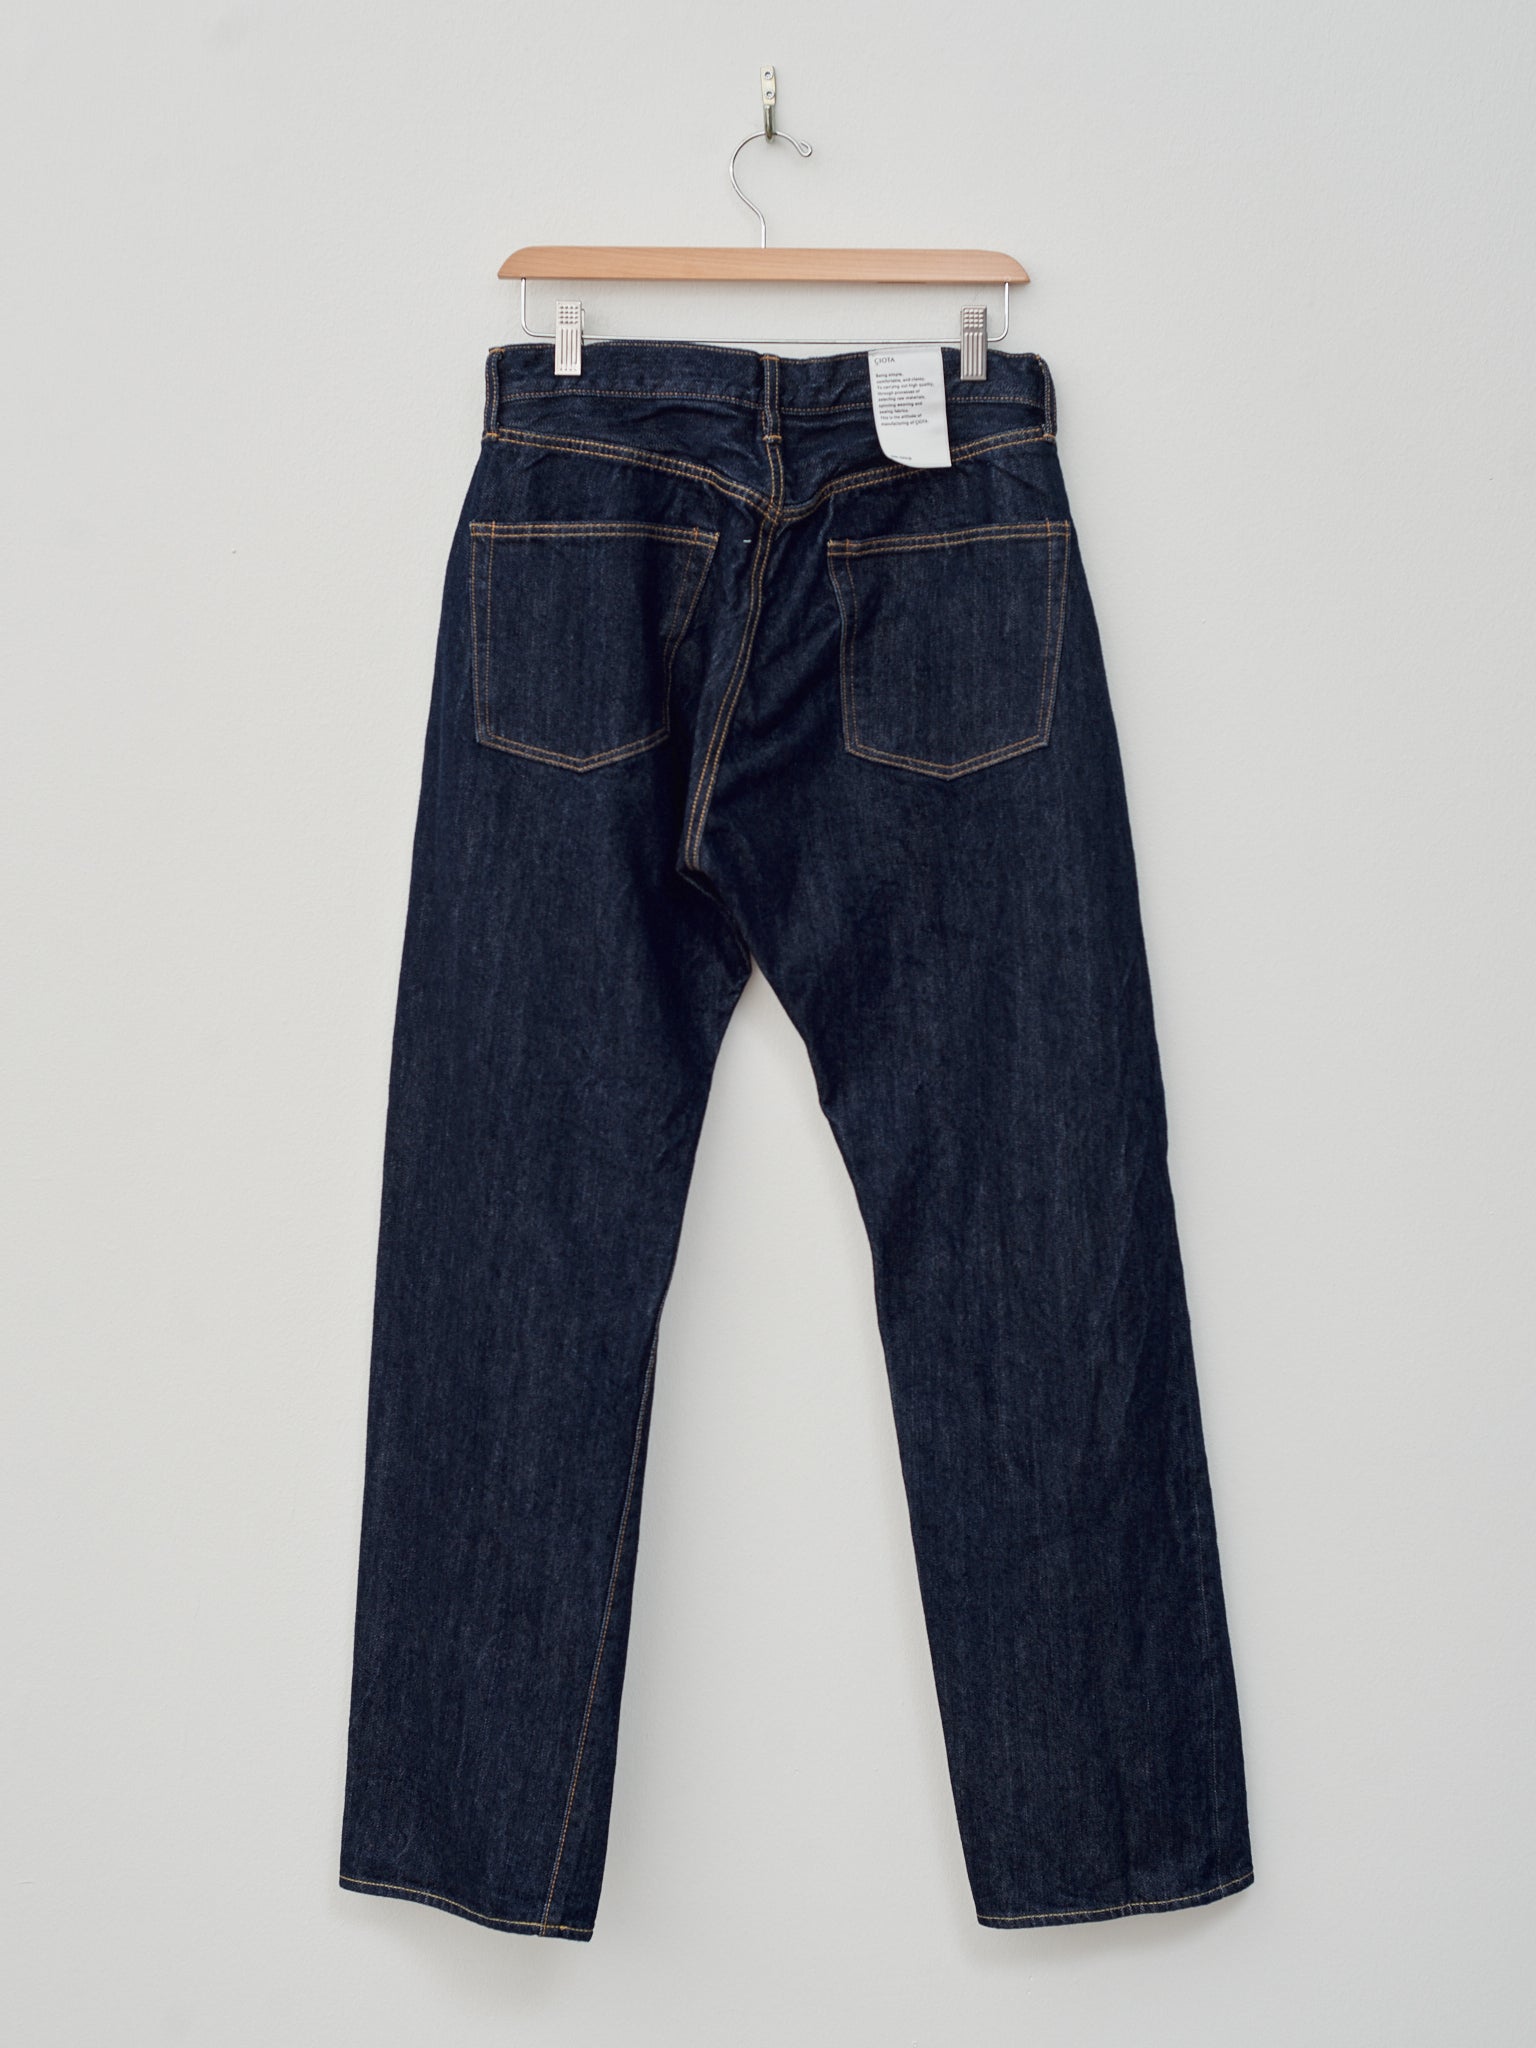 Namu Shop - Ciota Straight 5 Pocket Pants - Navy (One Wash)